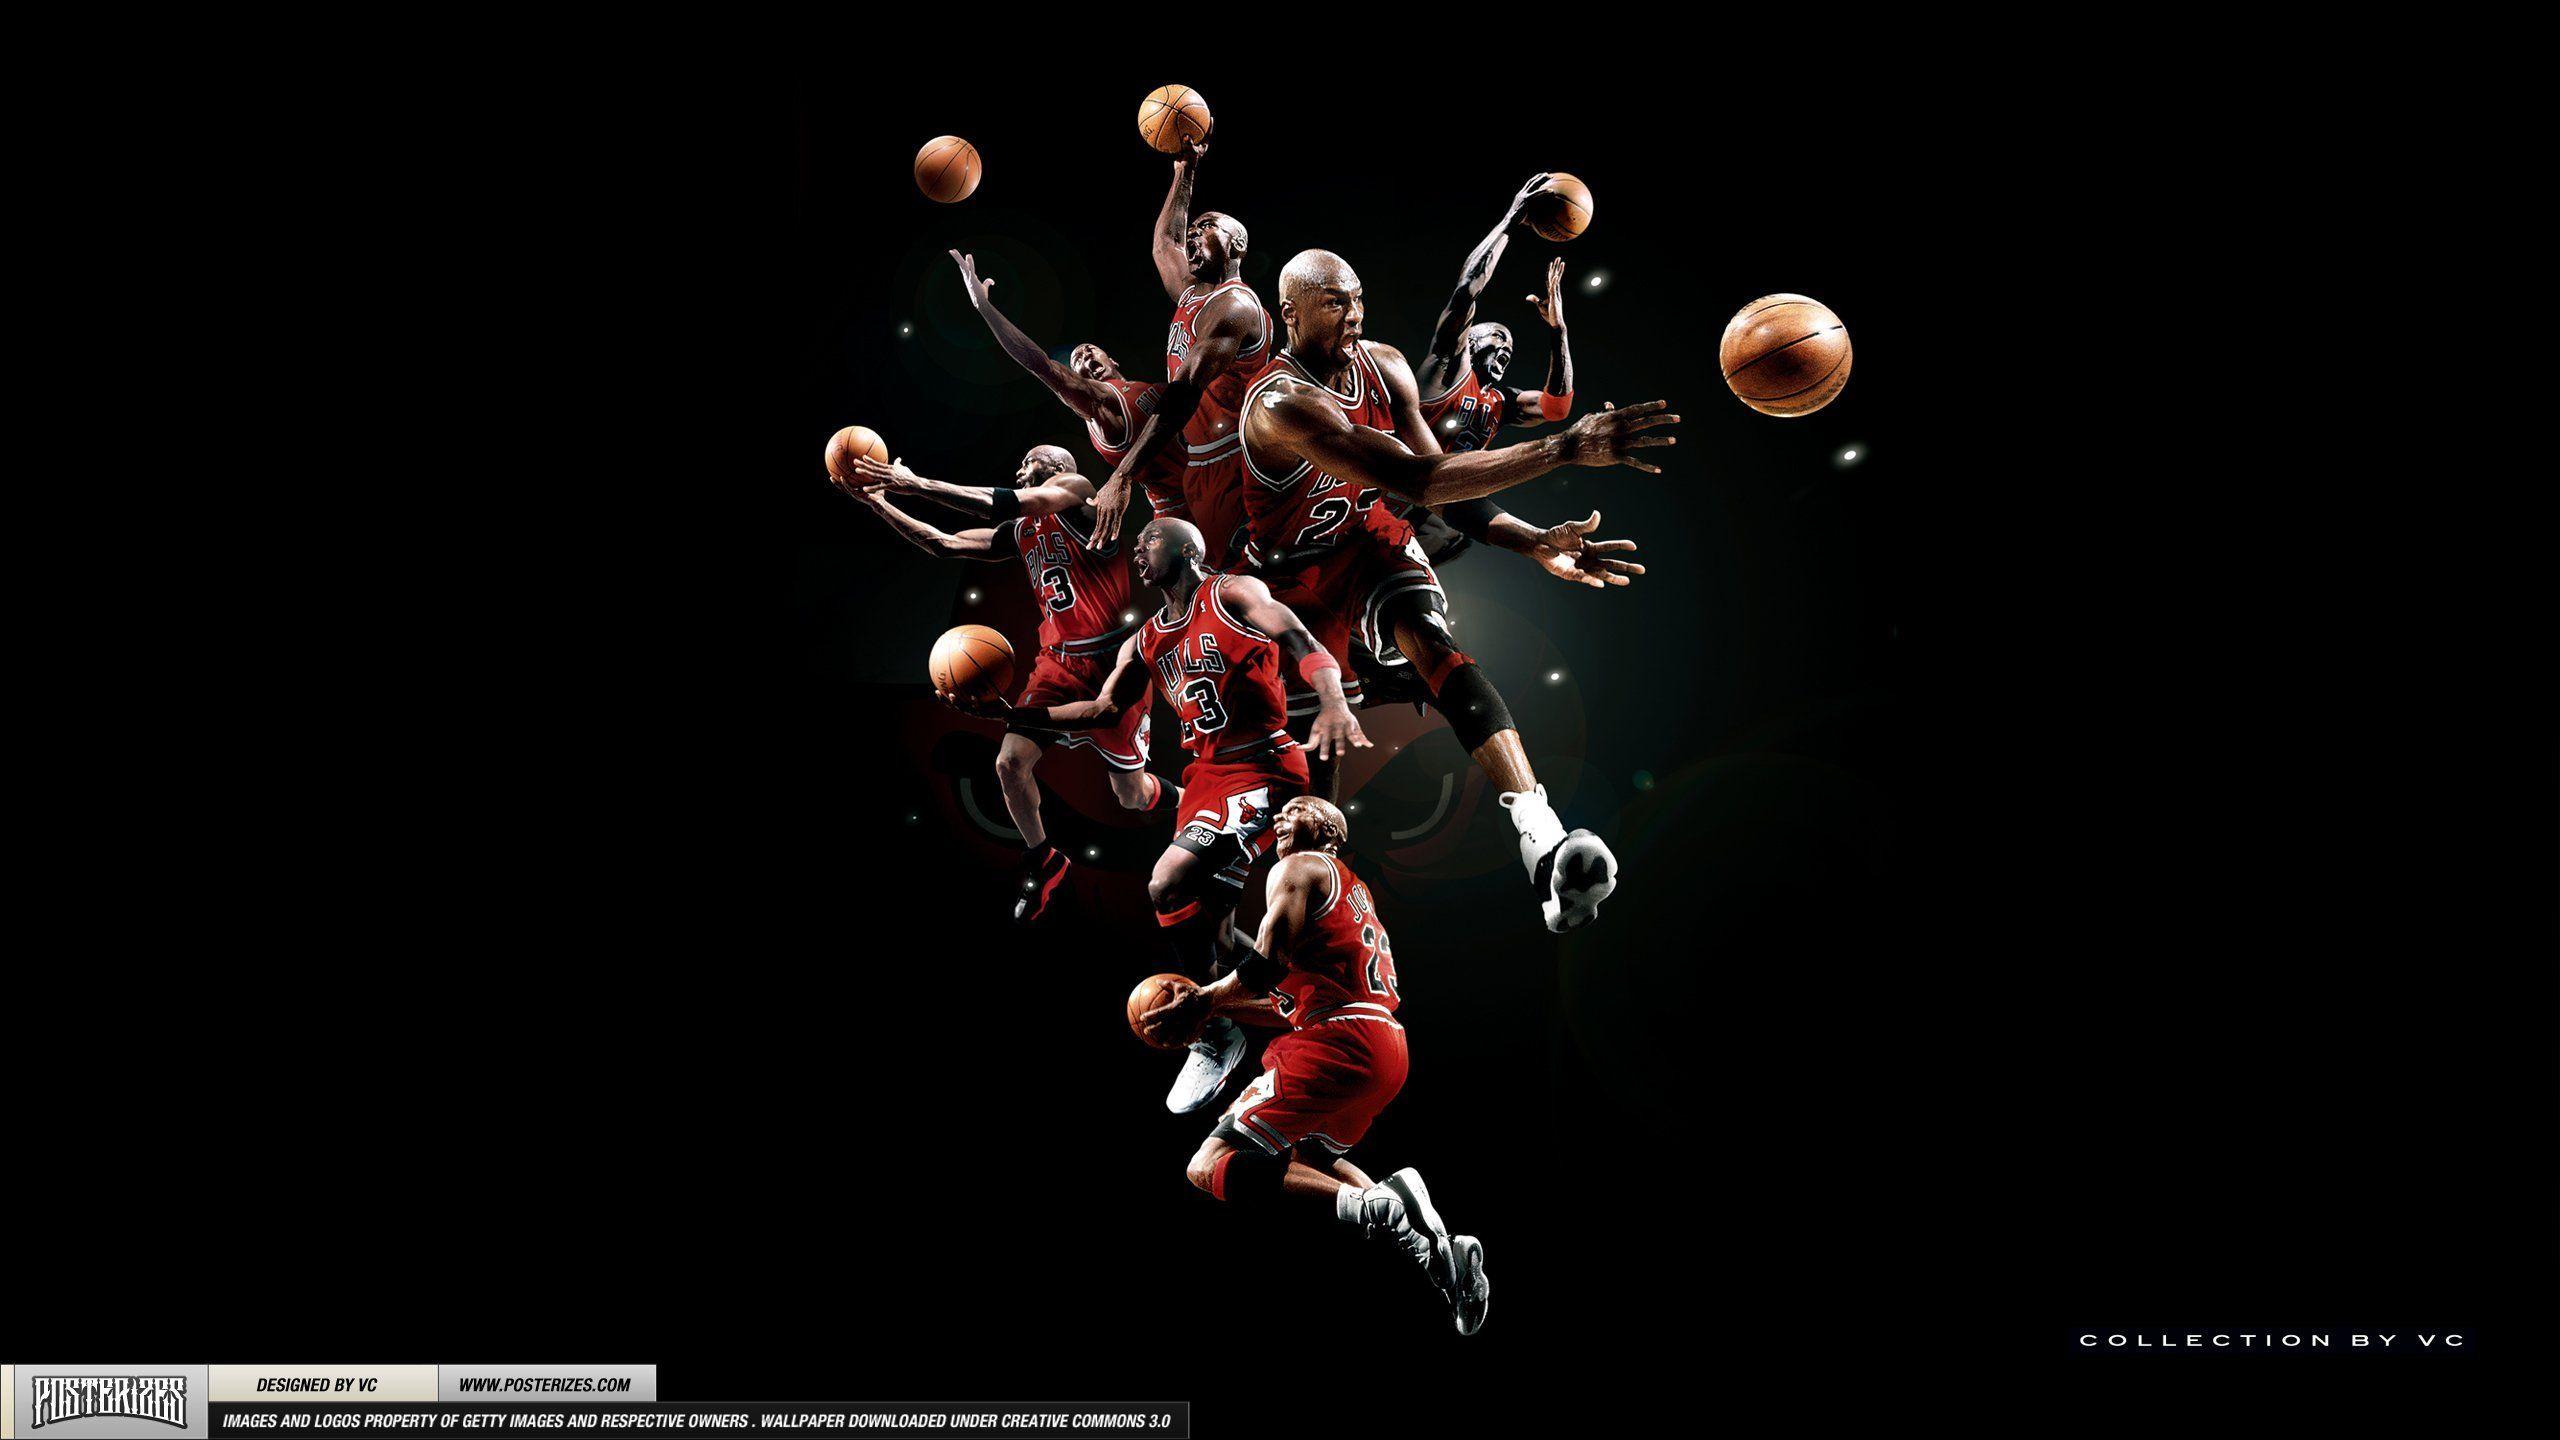 cool basketball wallpaper break